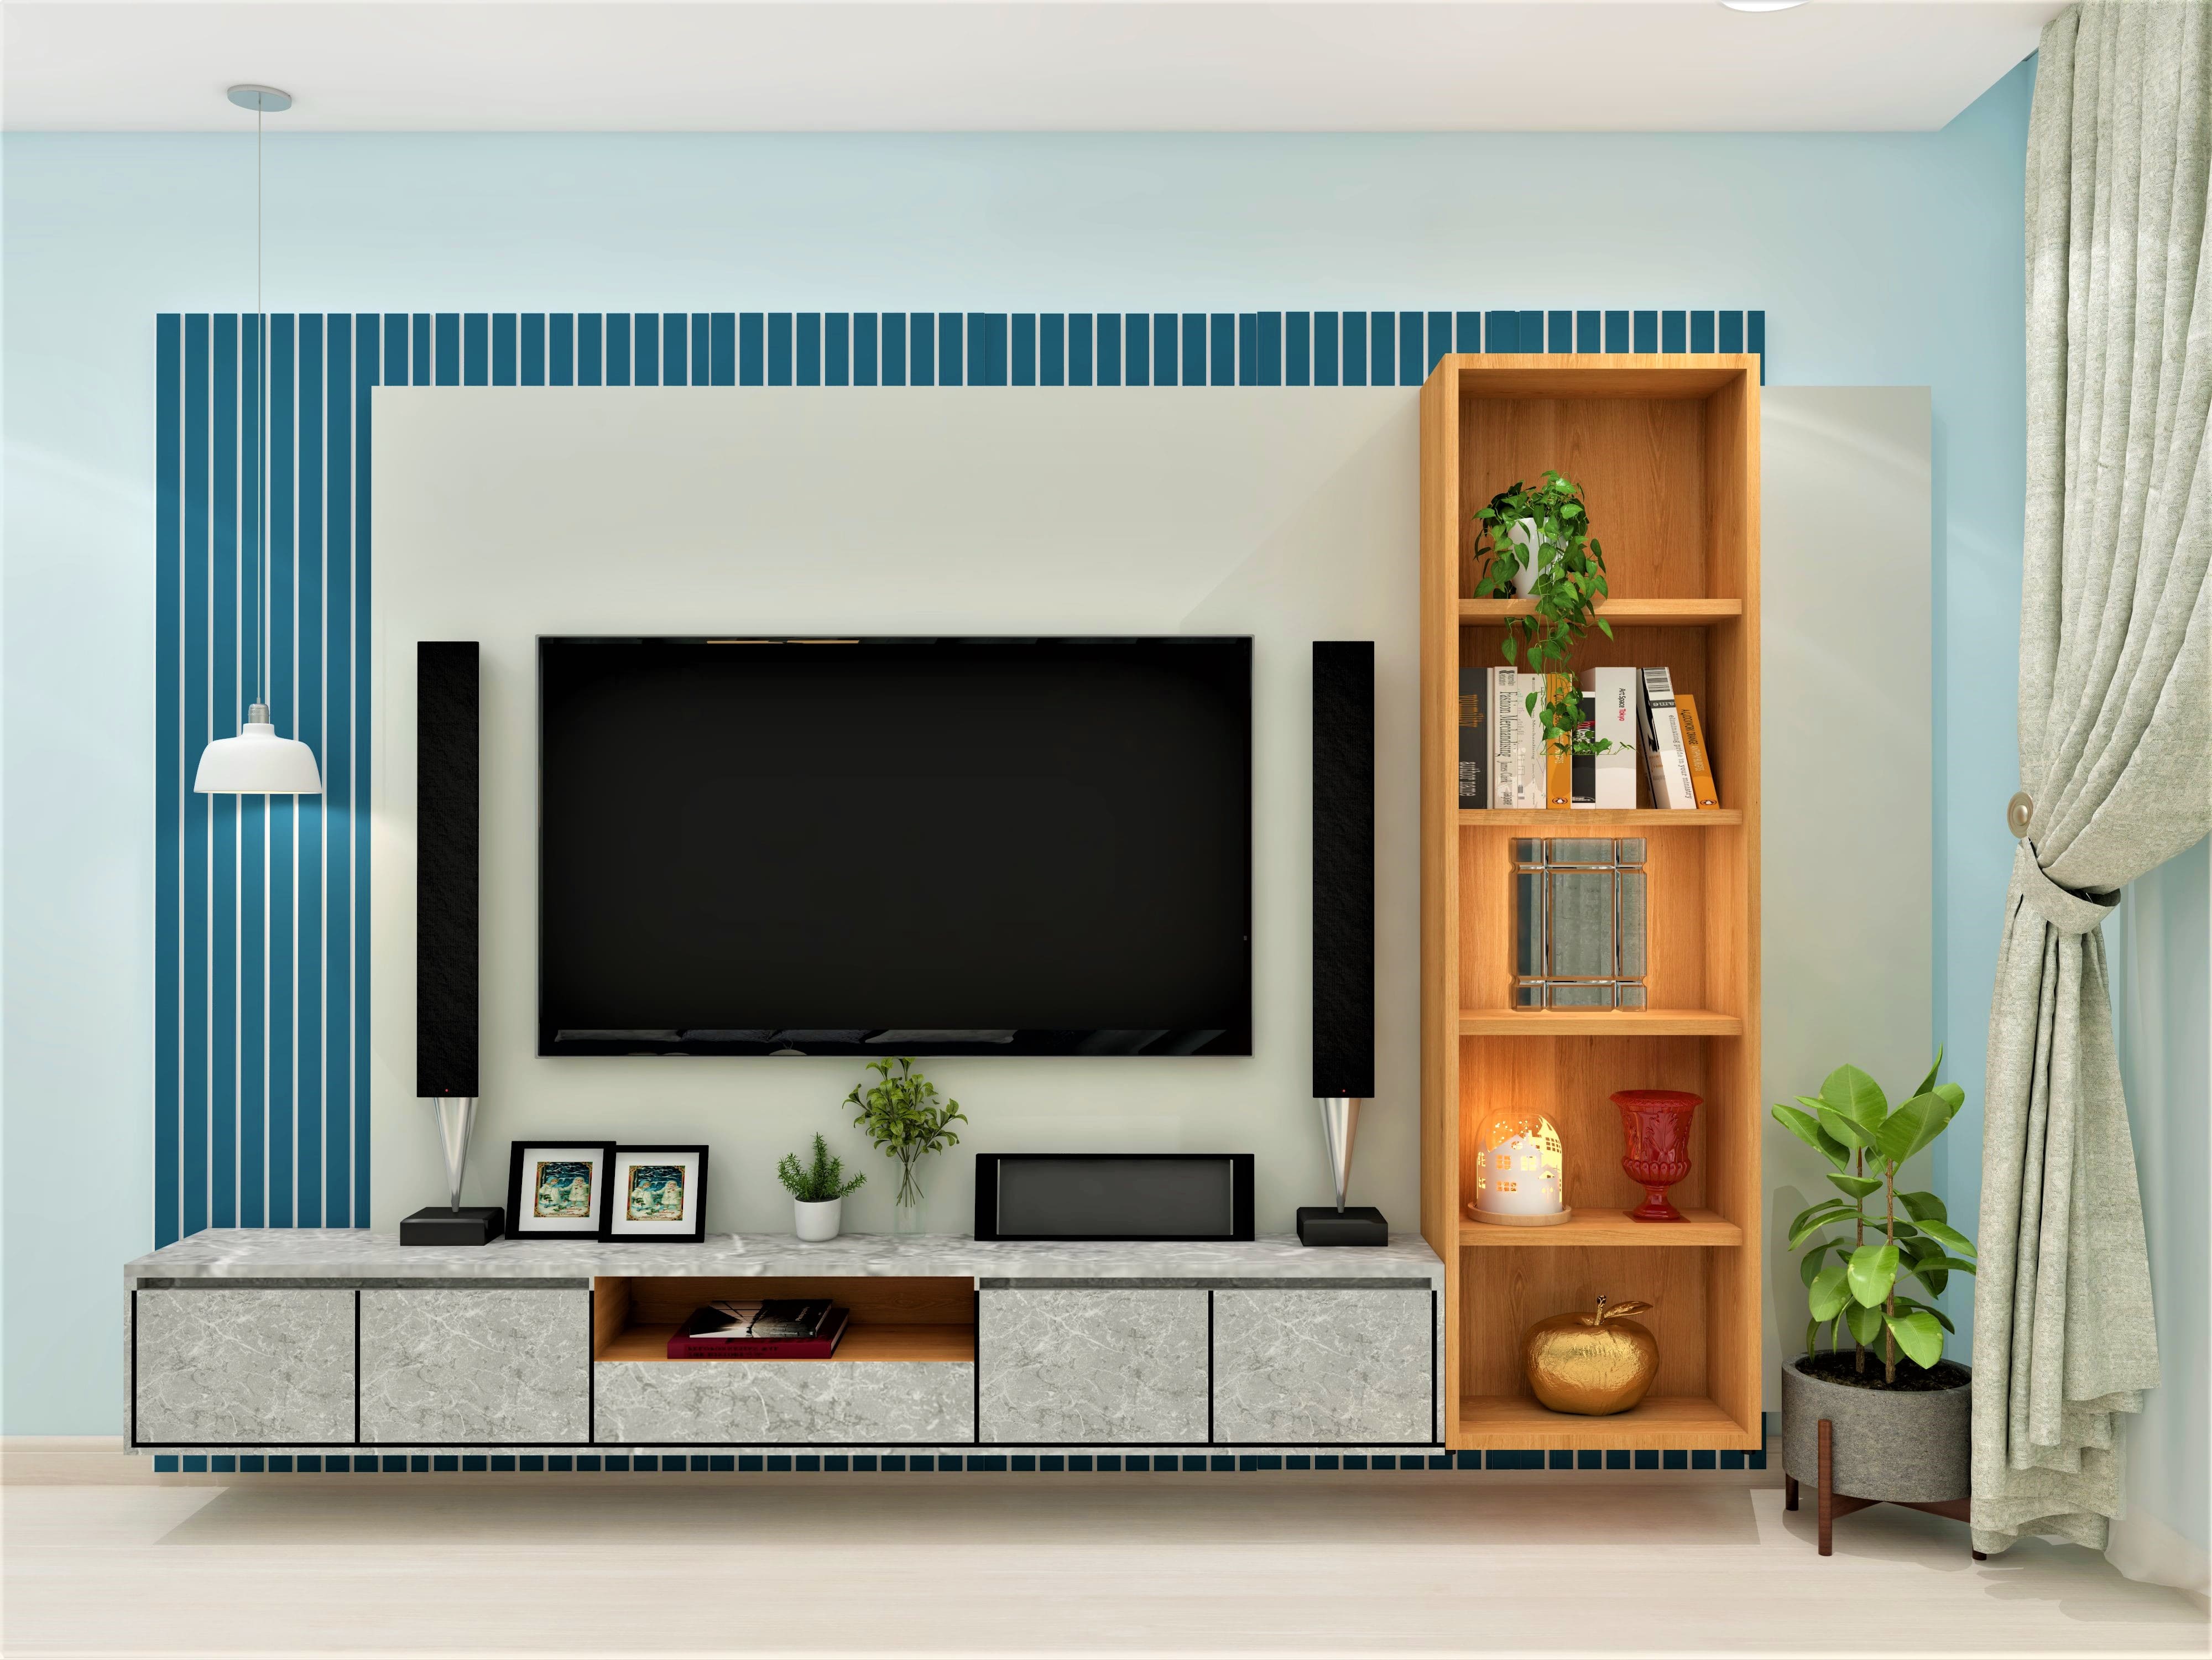 Minimalistic living room design in refreshing blue hues - Beautiful Homes